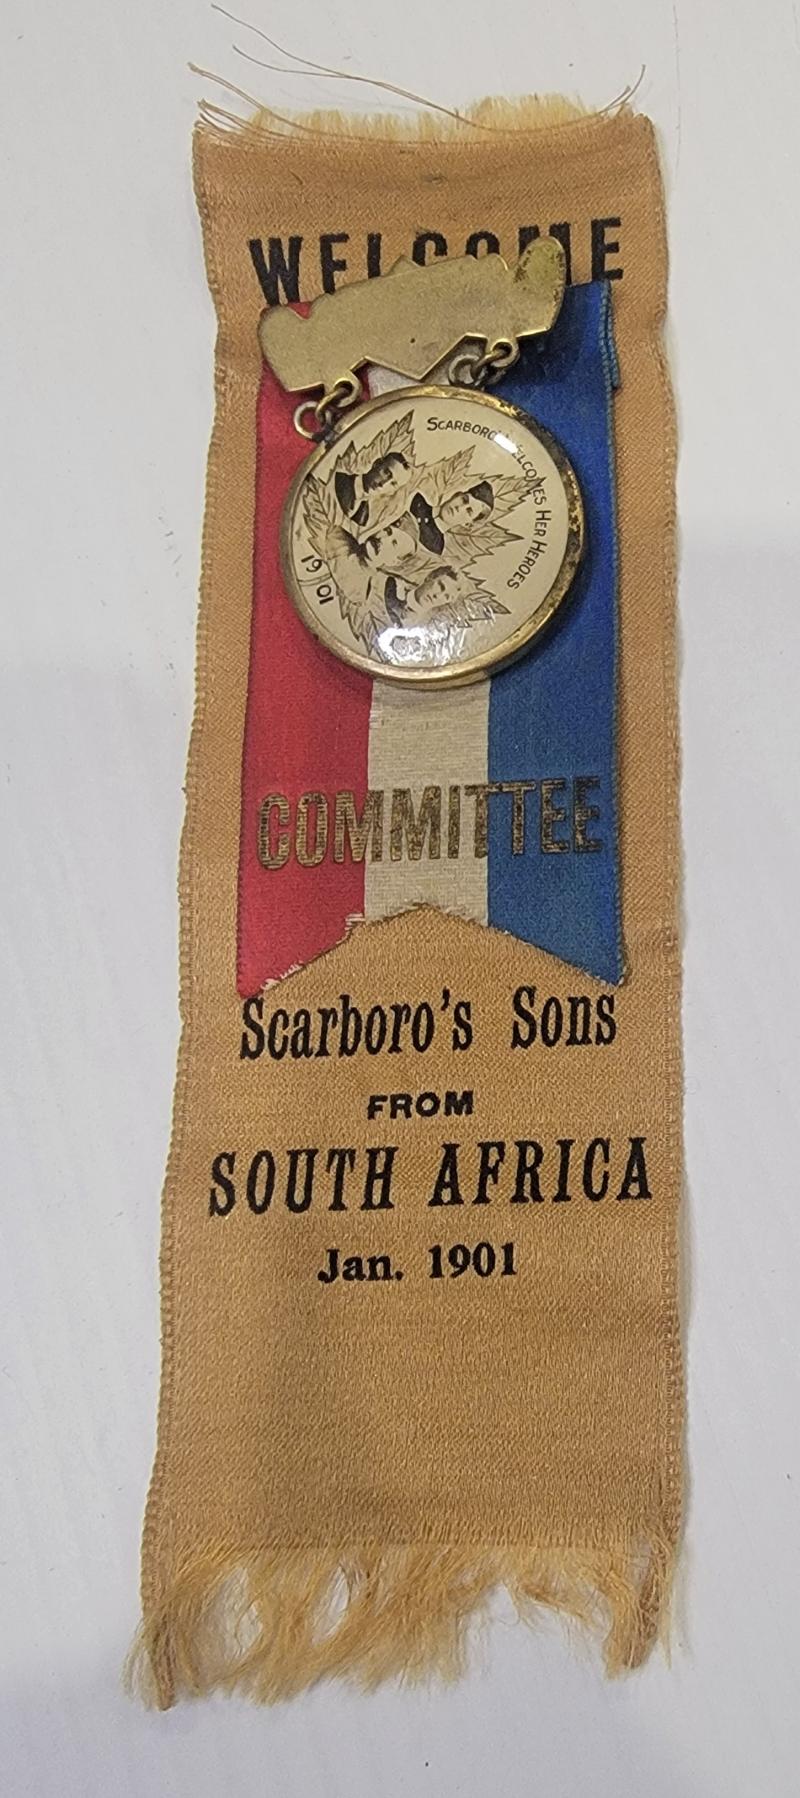 South African War Souvenir Silk Book Mark - Welcome Home Sons of Scarborough